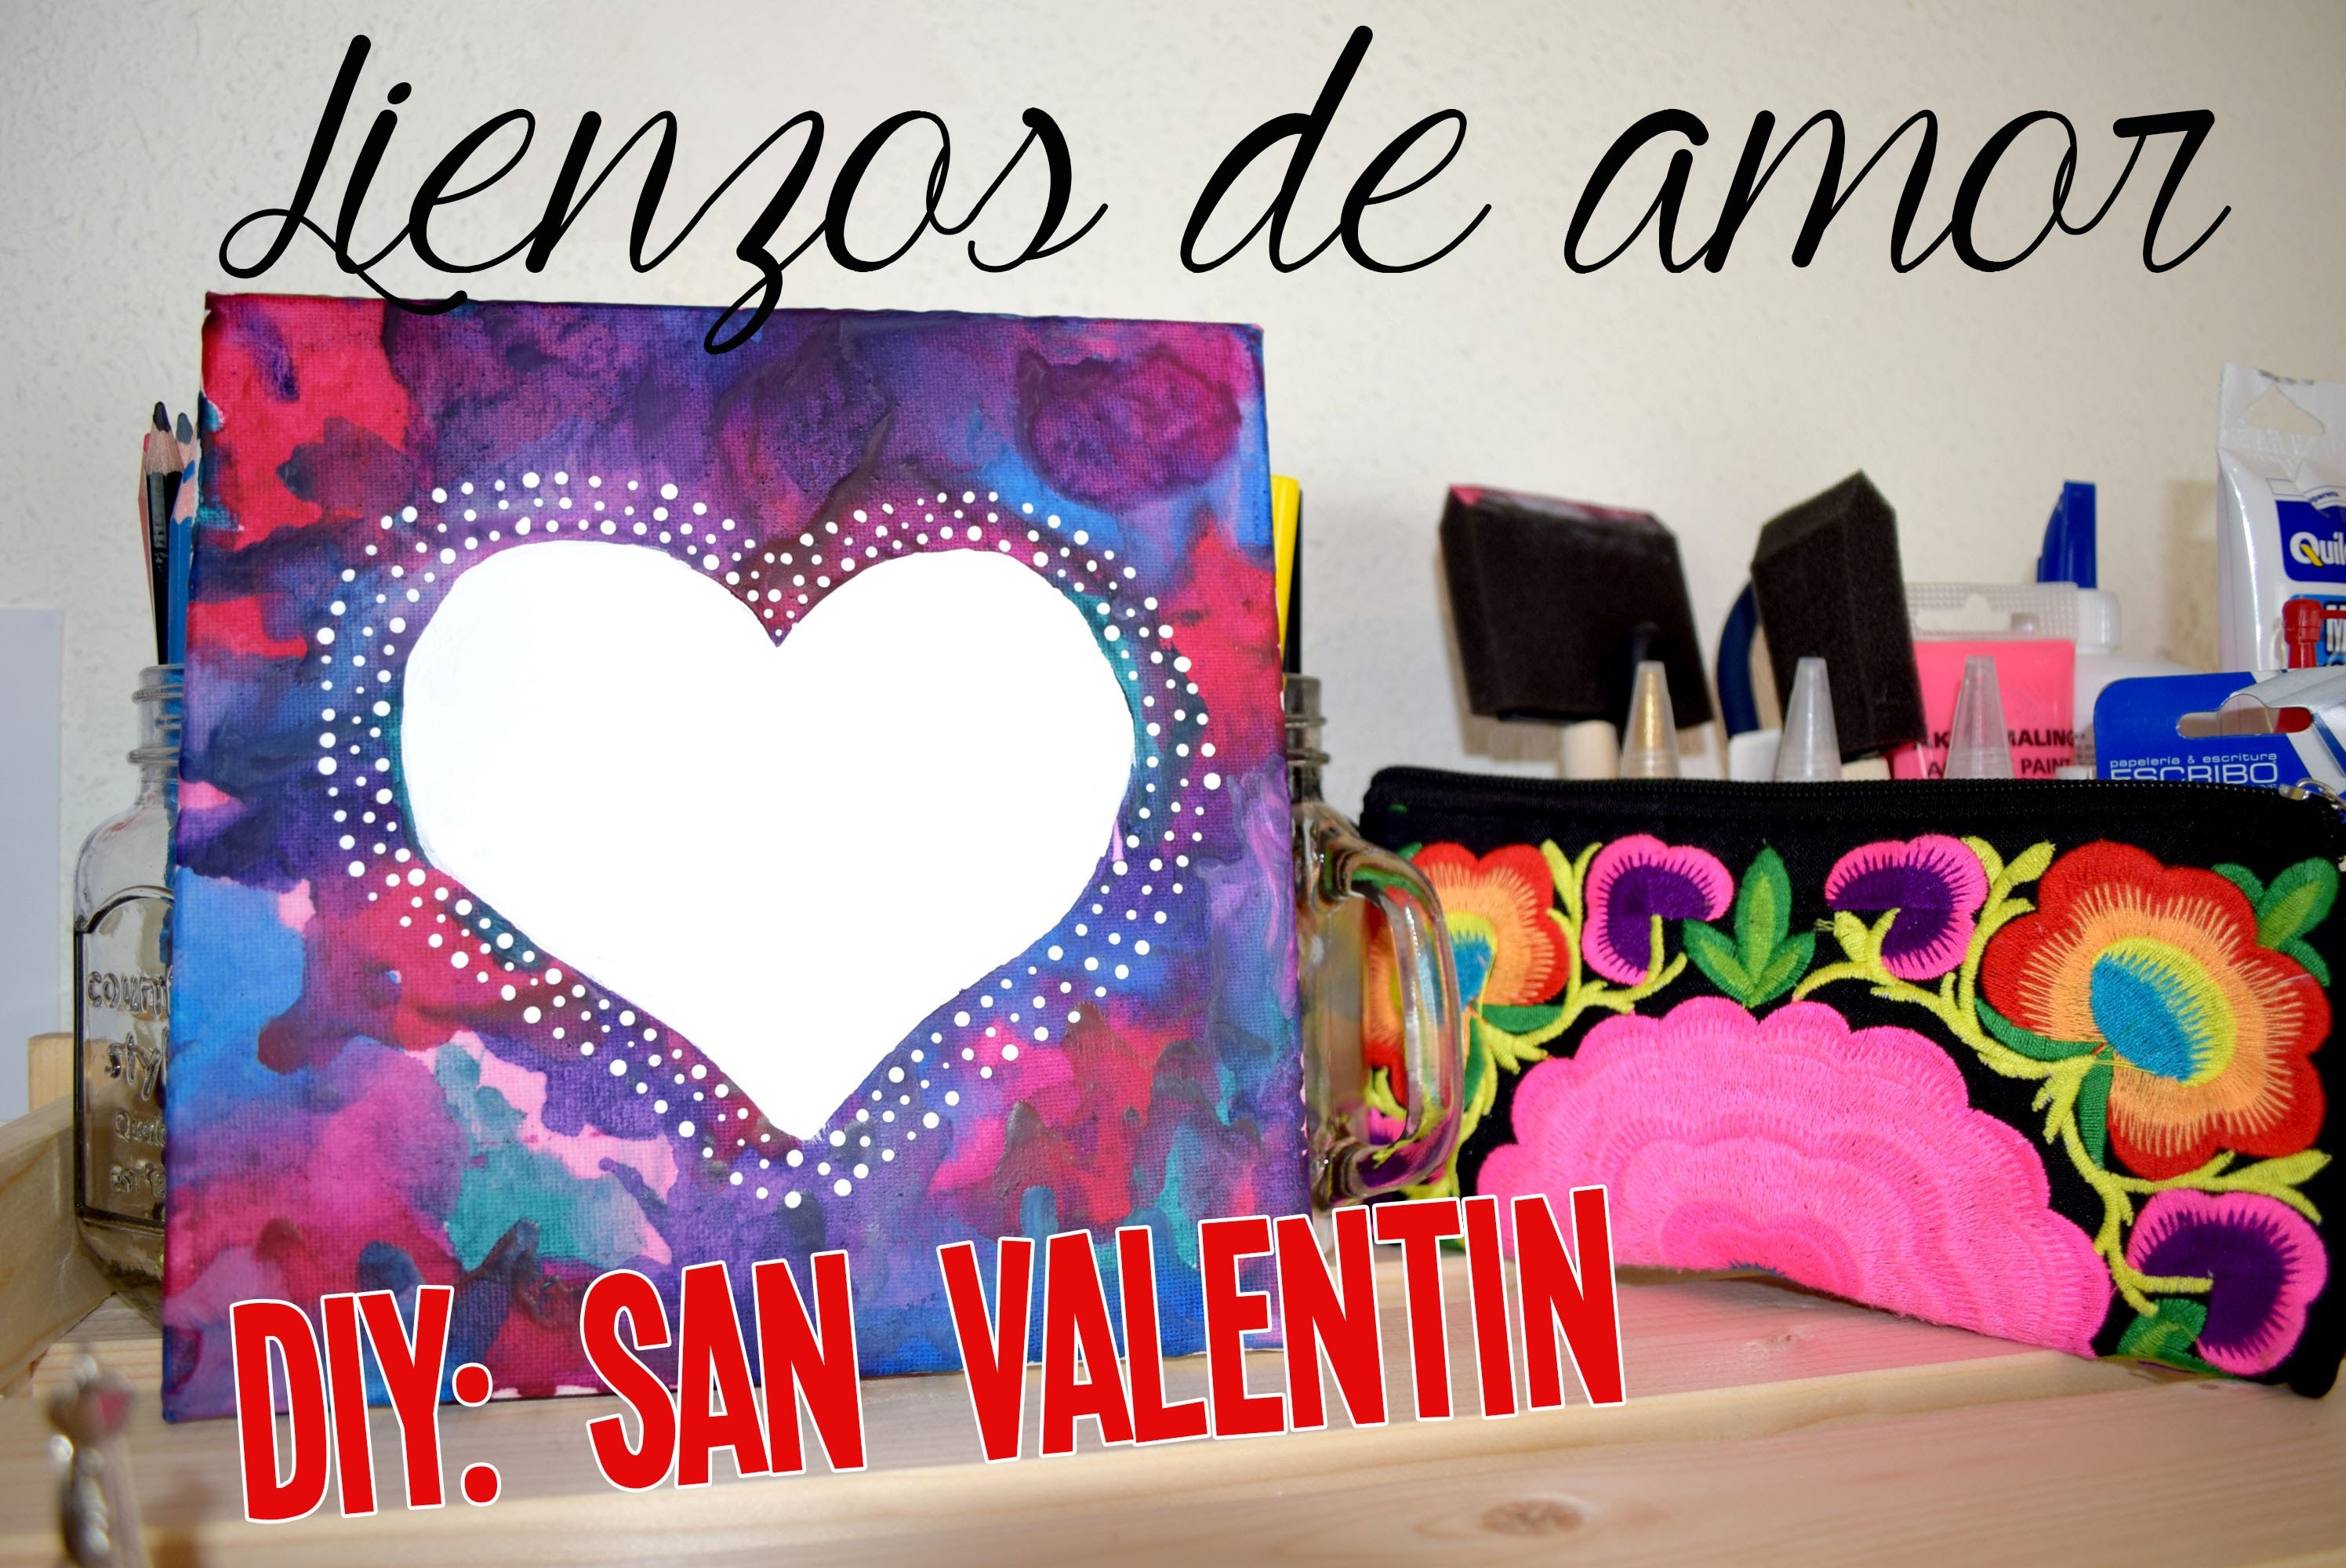 DIY: Lienzos de amor ♡ San Valentín || Likesely